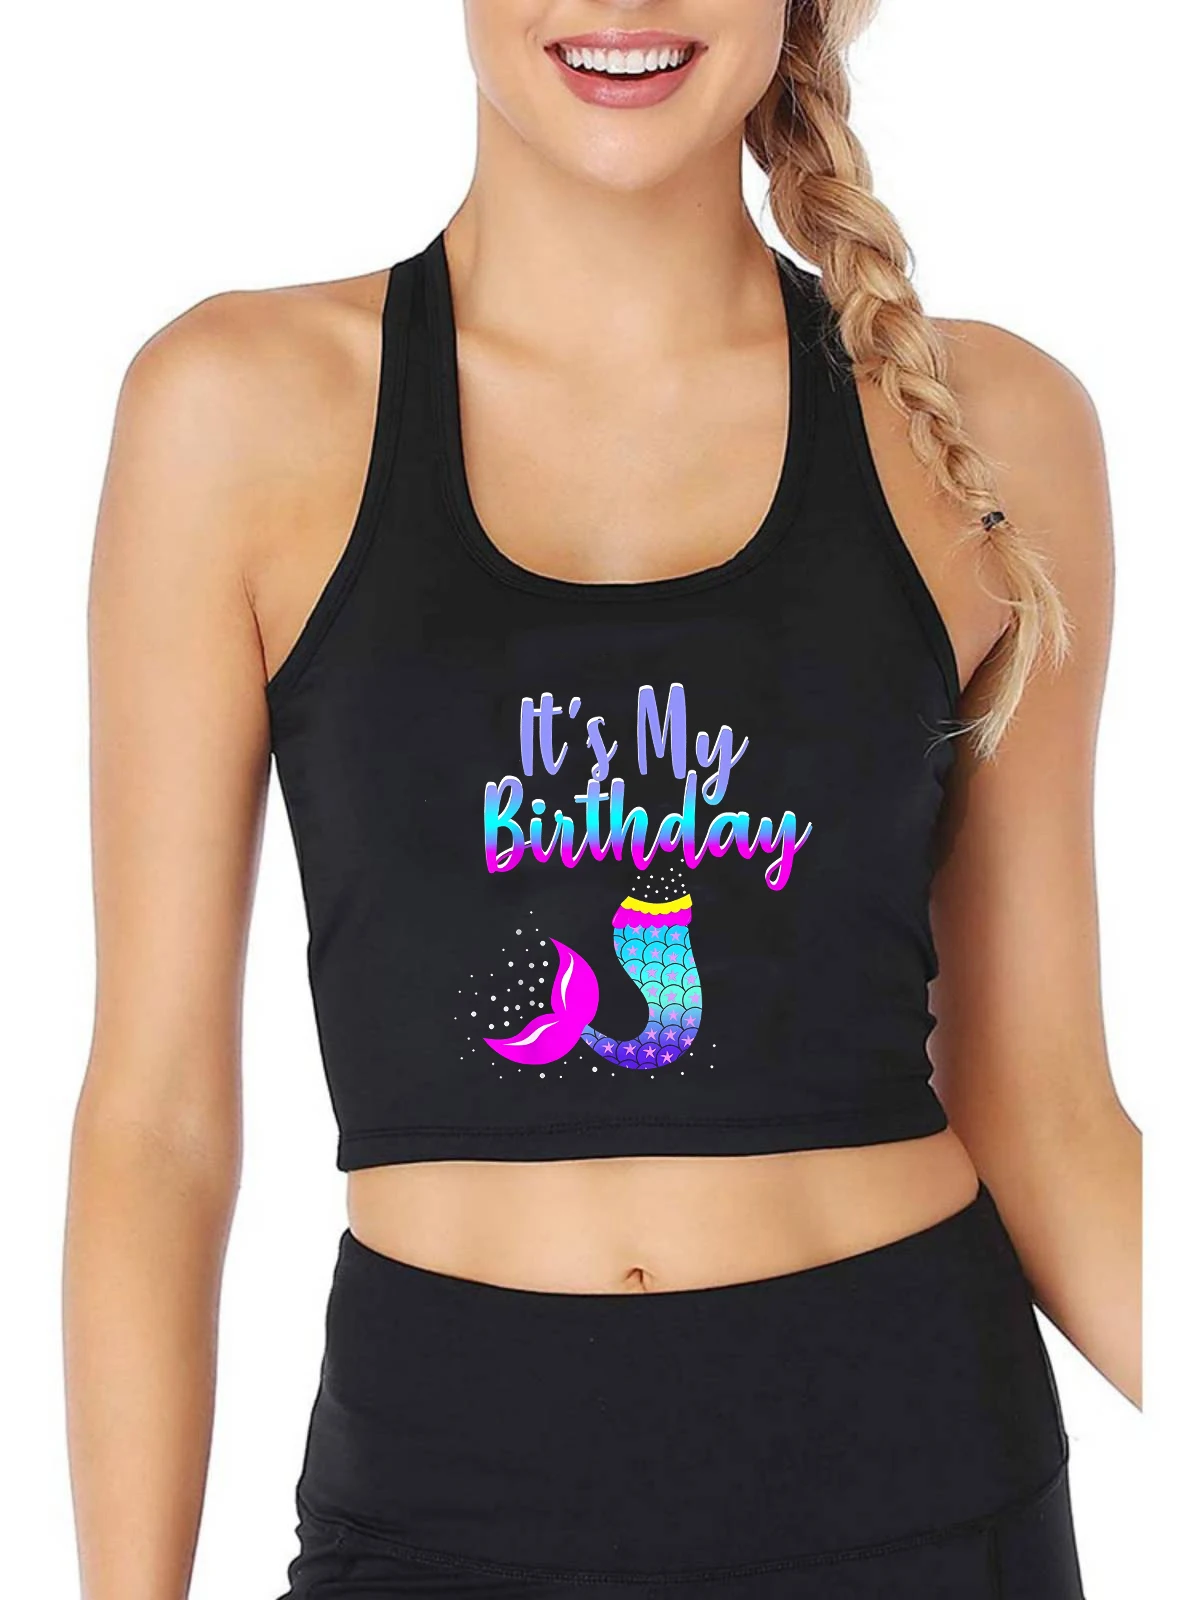 

It's My Birthday Print Beautiful Mermaid Graphical Design Crop Top Women's Sexy Slim Fit Tank Tops Birthday Present Camisole